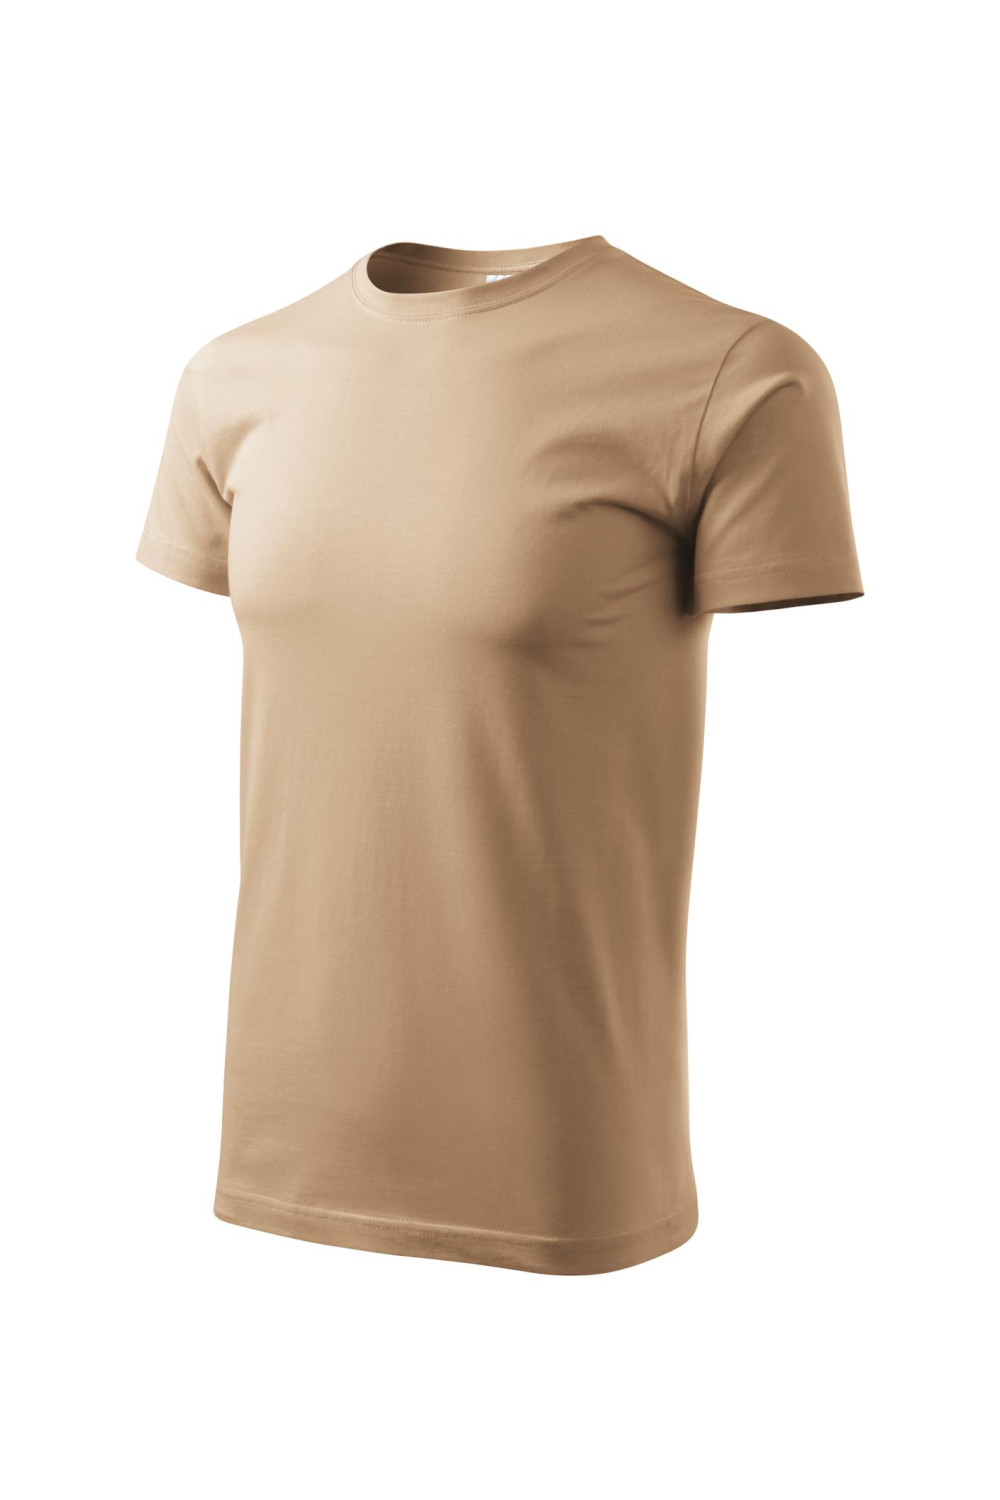 Koszulka męska 100% bawełna BASIC 129  kolor piaskowy